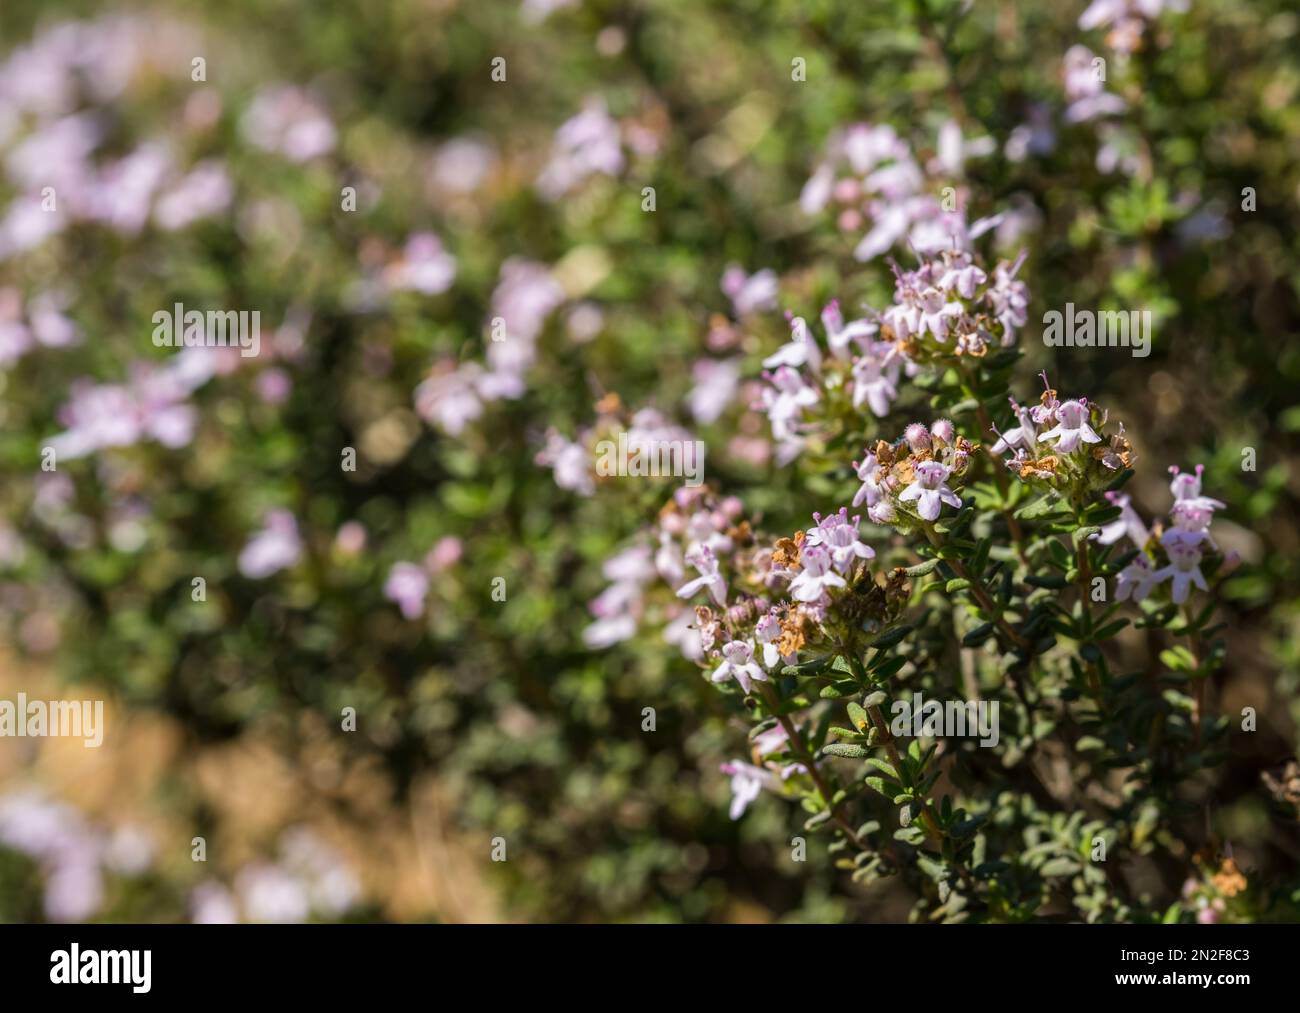 Thyme wild bush among the stones. Thymus vulgaris, thymes - medicinal herbs. Natural park Garraf, Spain Stock Photo